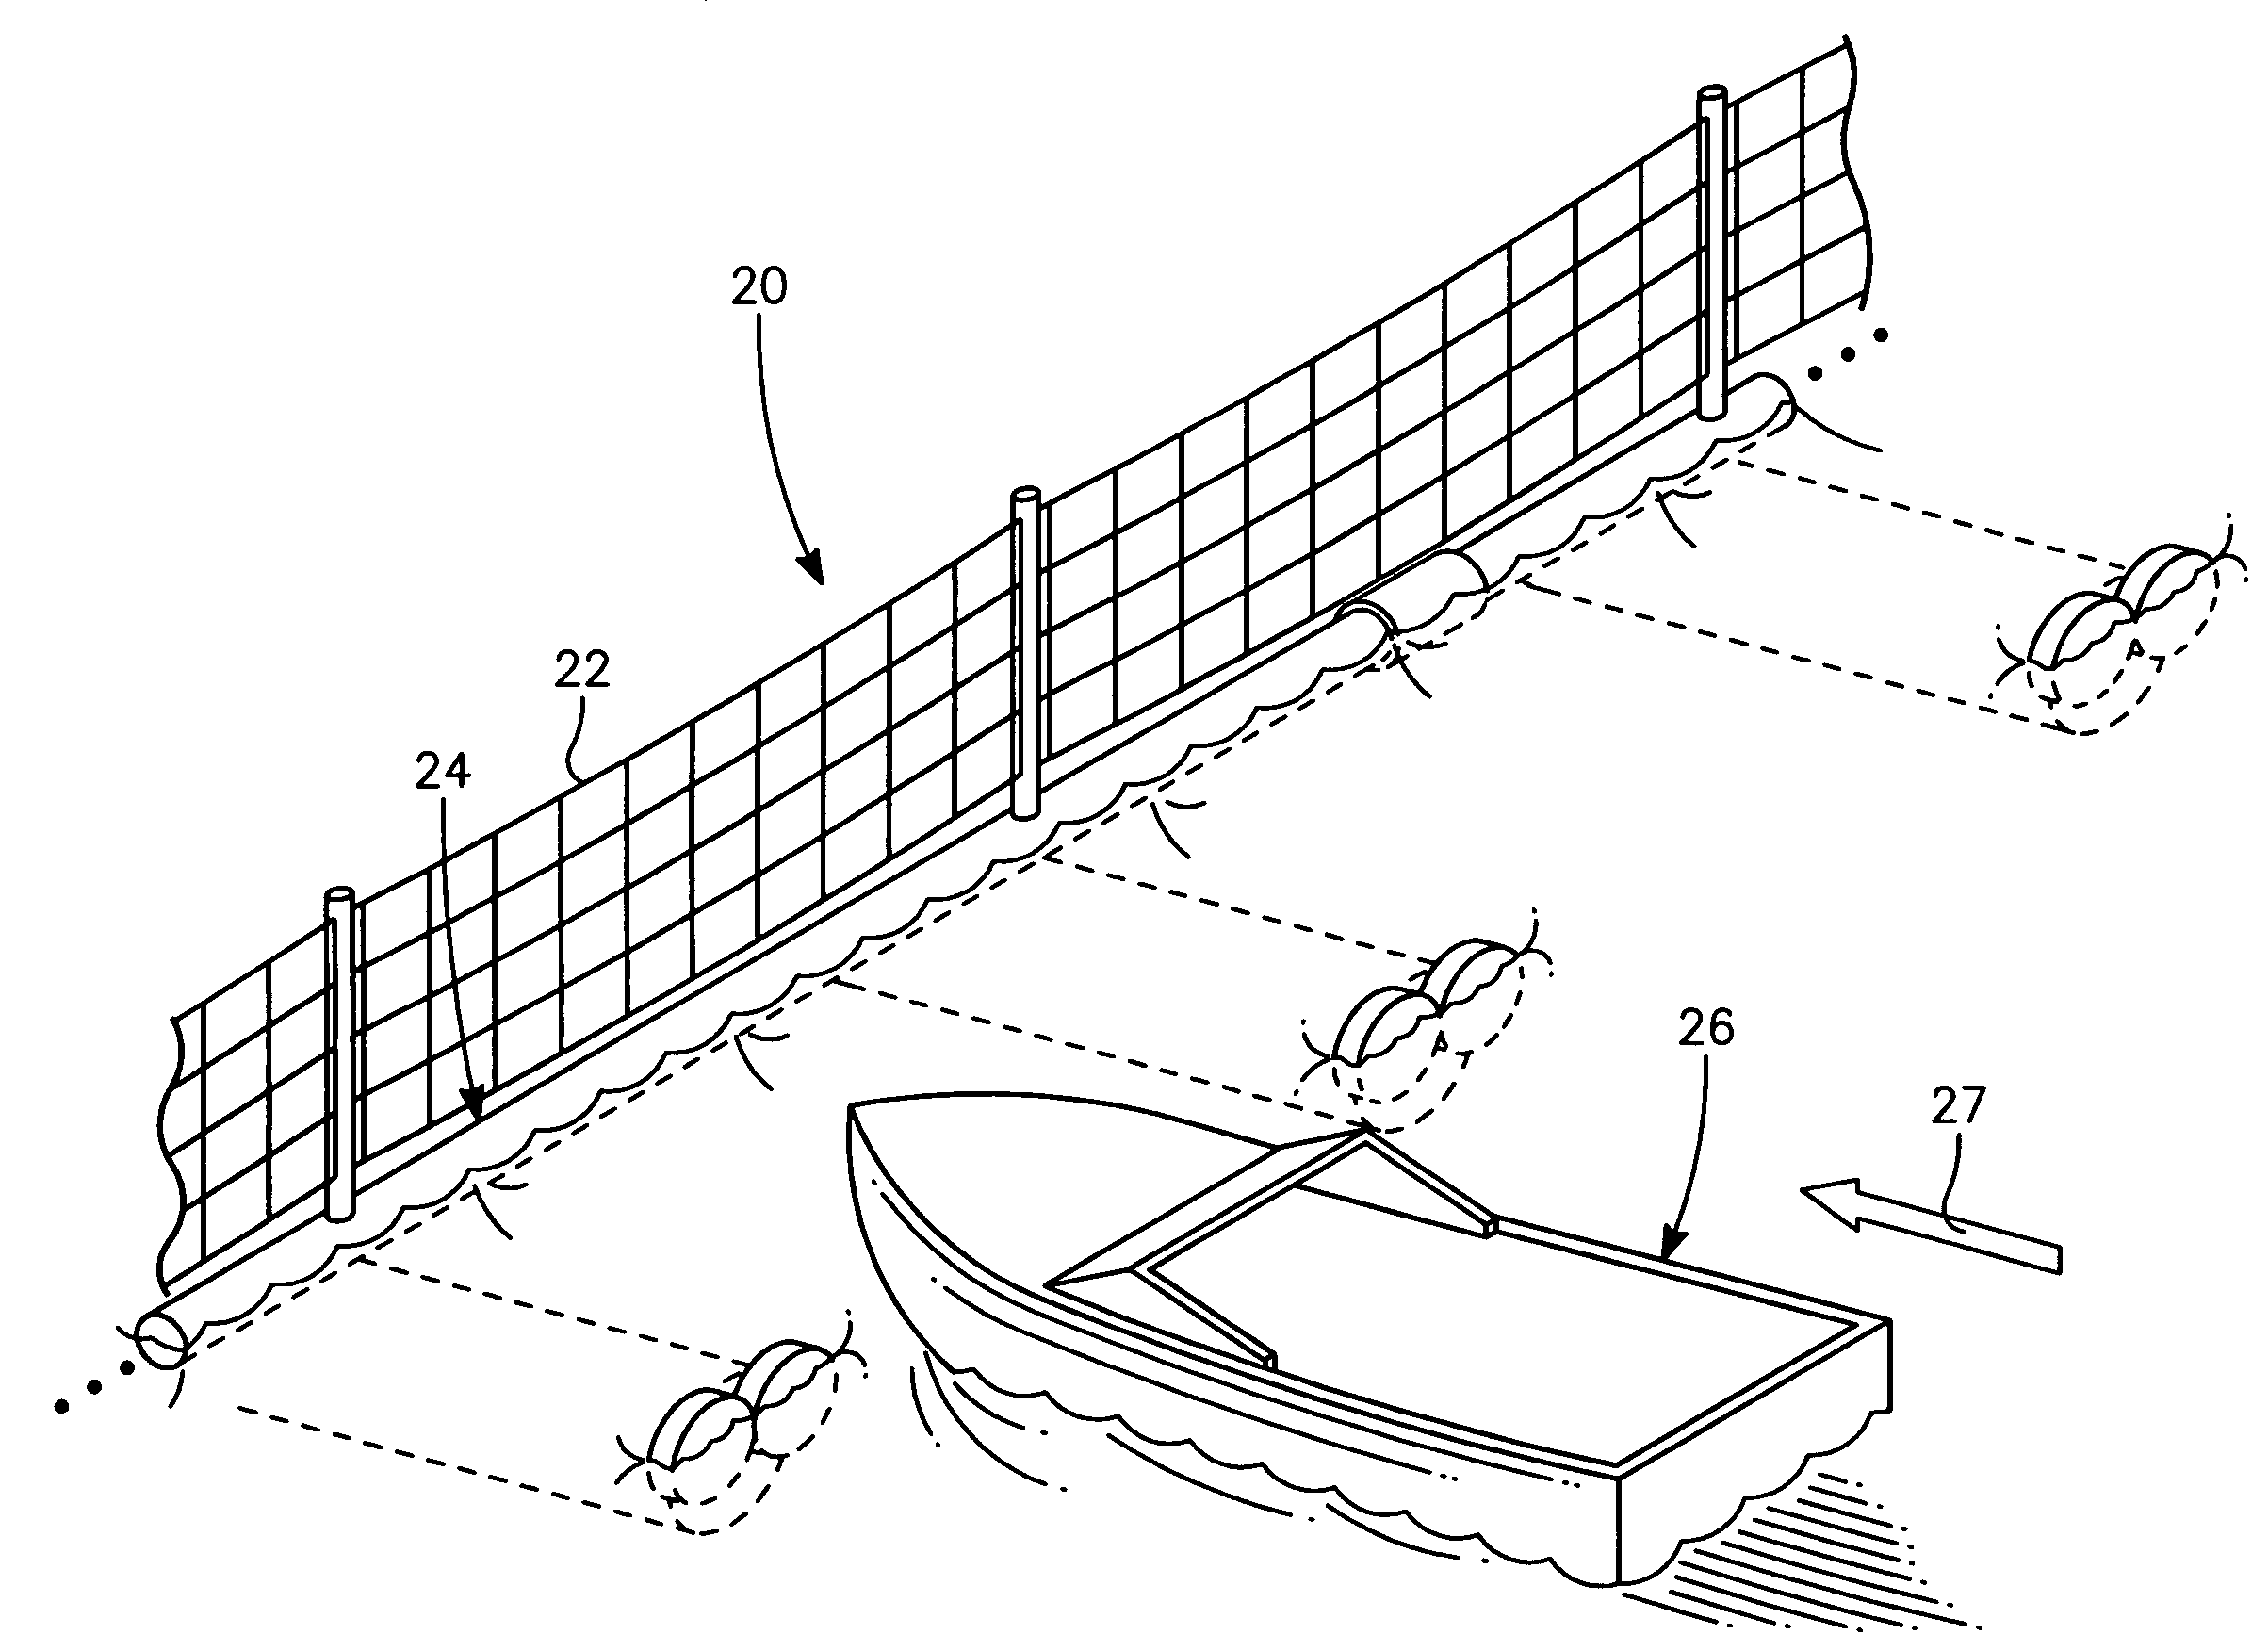 Port security barrier